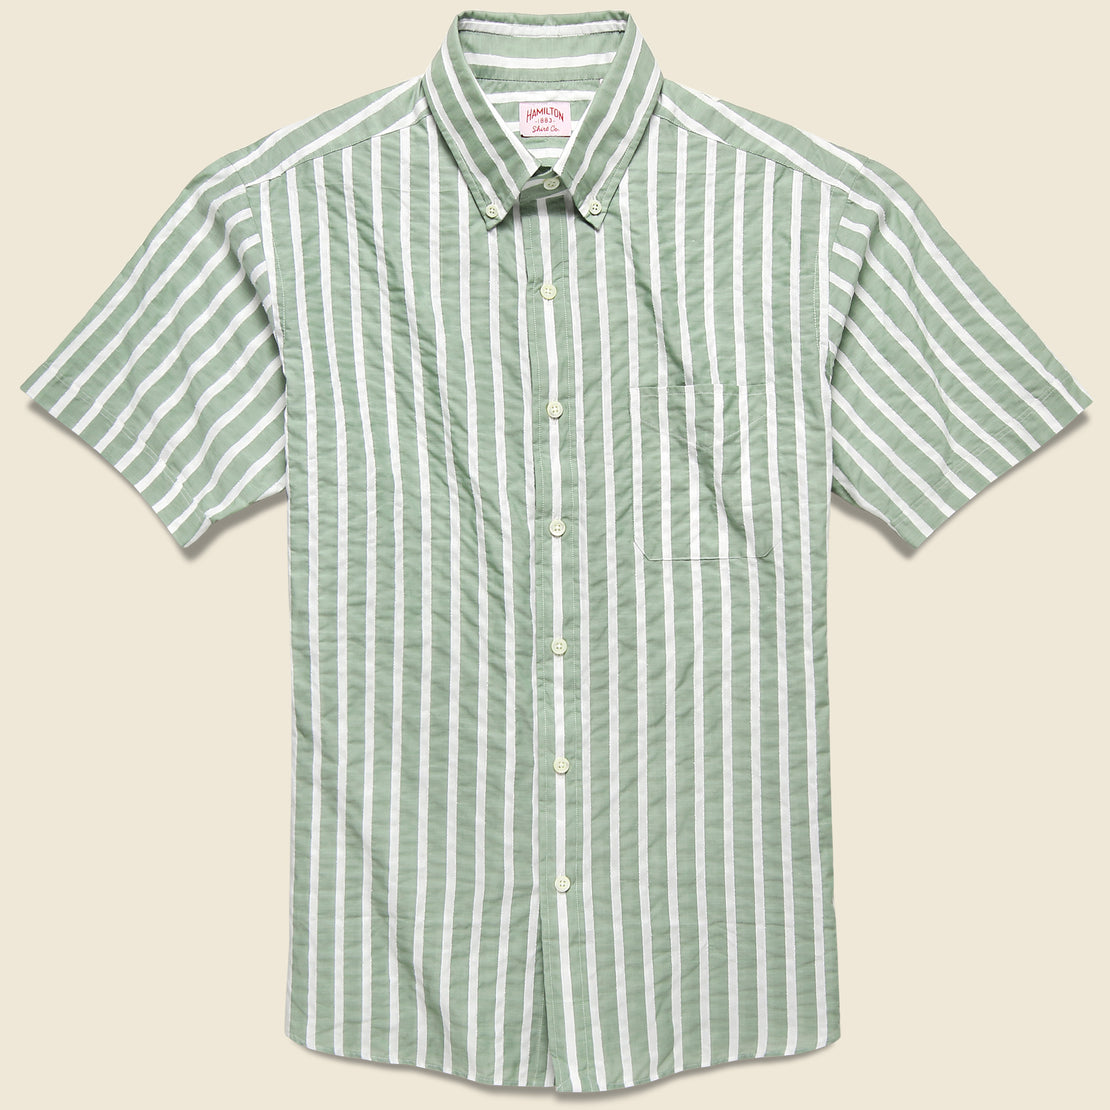 Hamilton Shirt Co. Textured Stripe Shirt - Sage/White